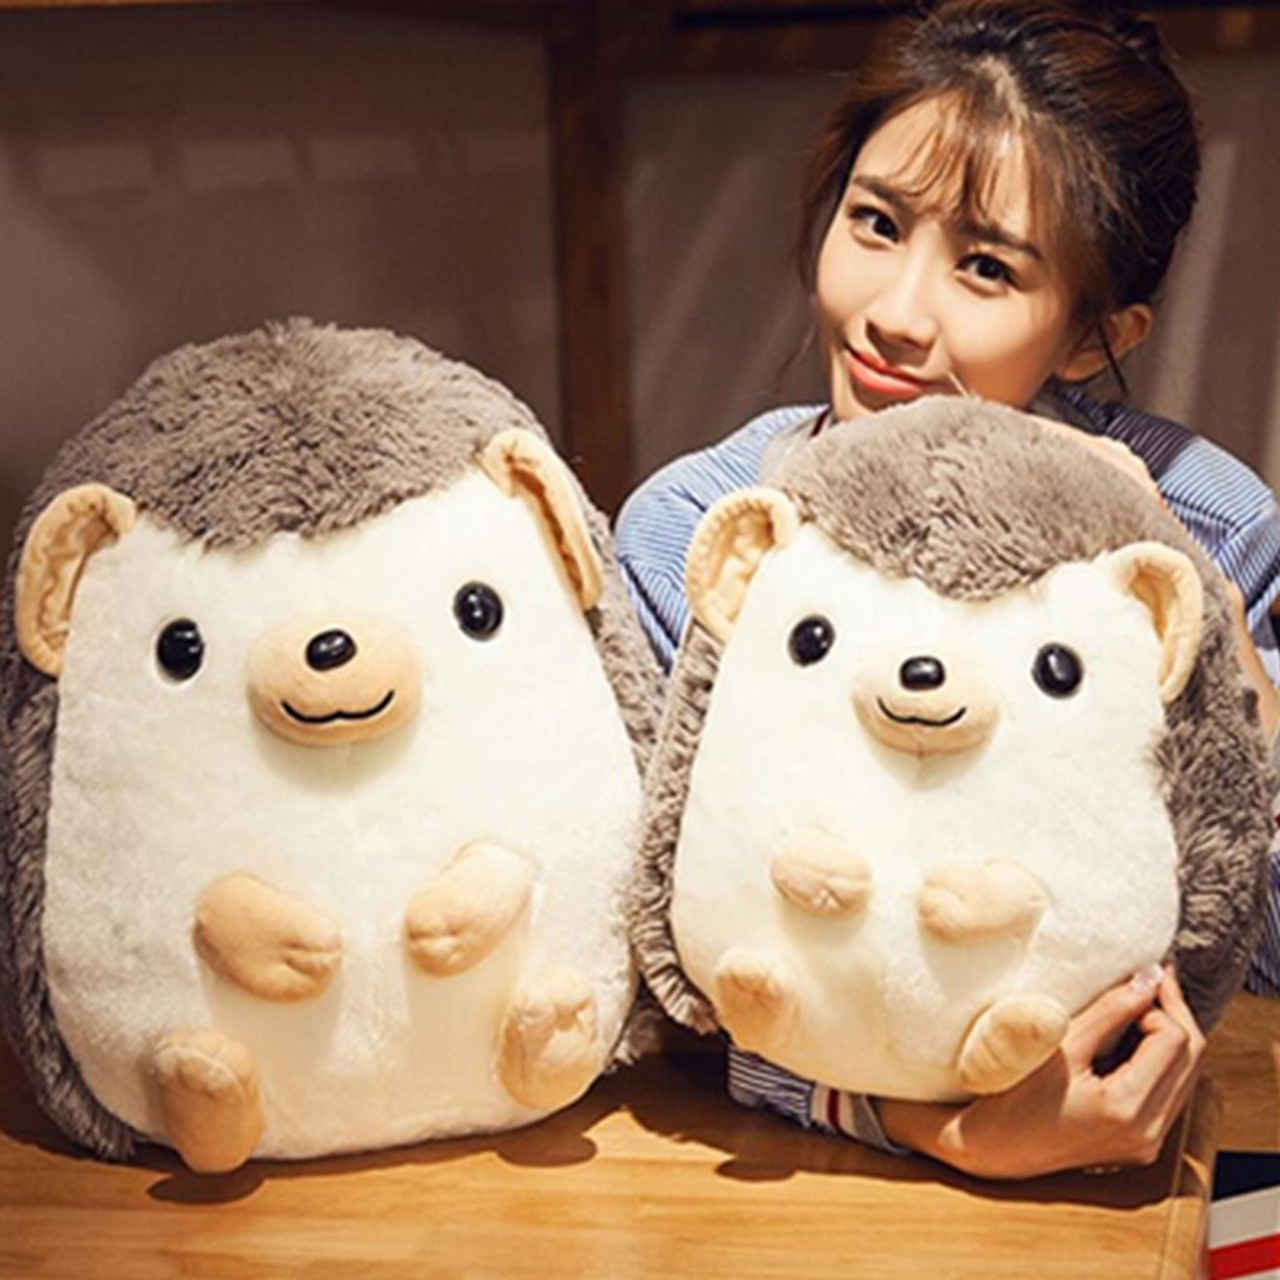 stuffed animal cotton